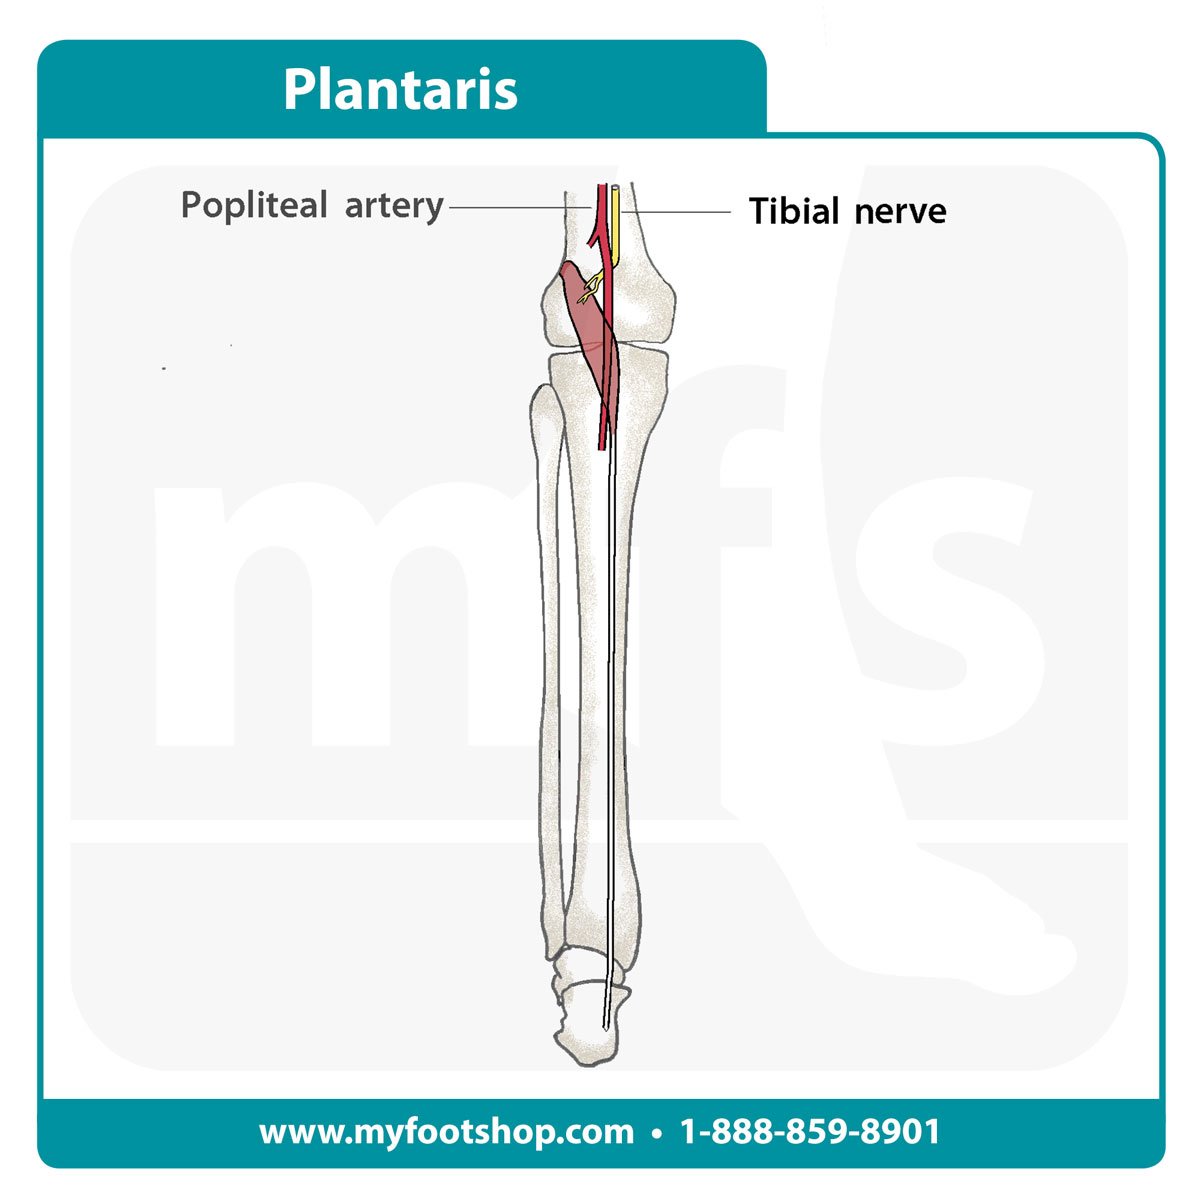 Plantaris muscle